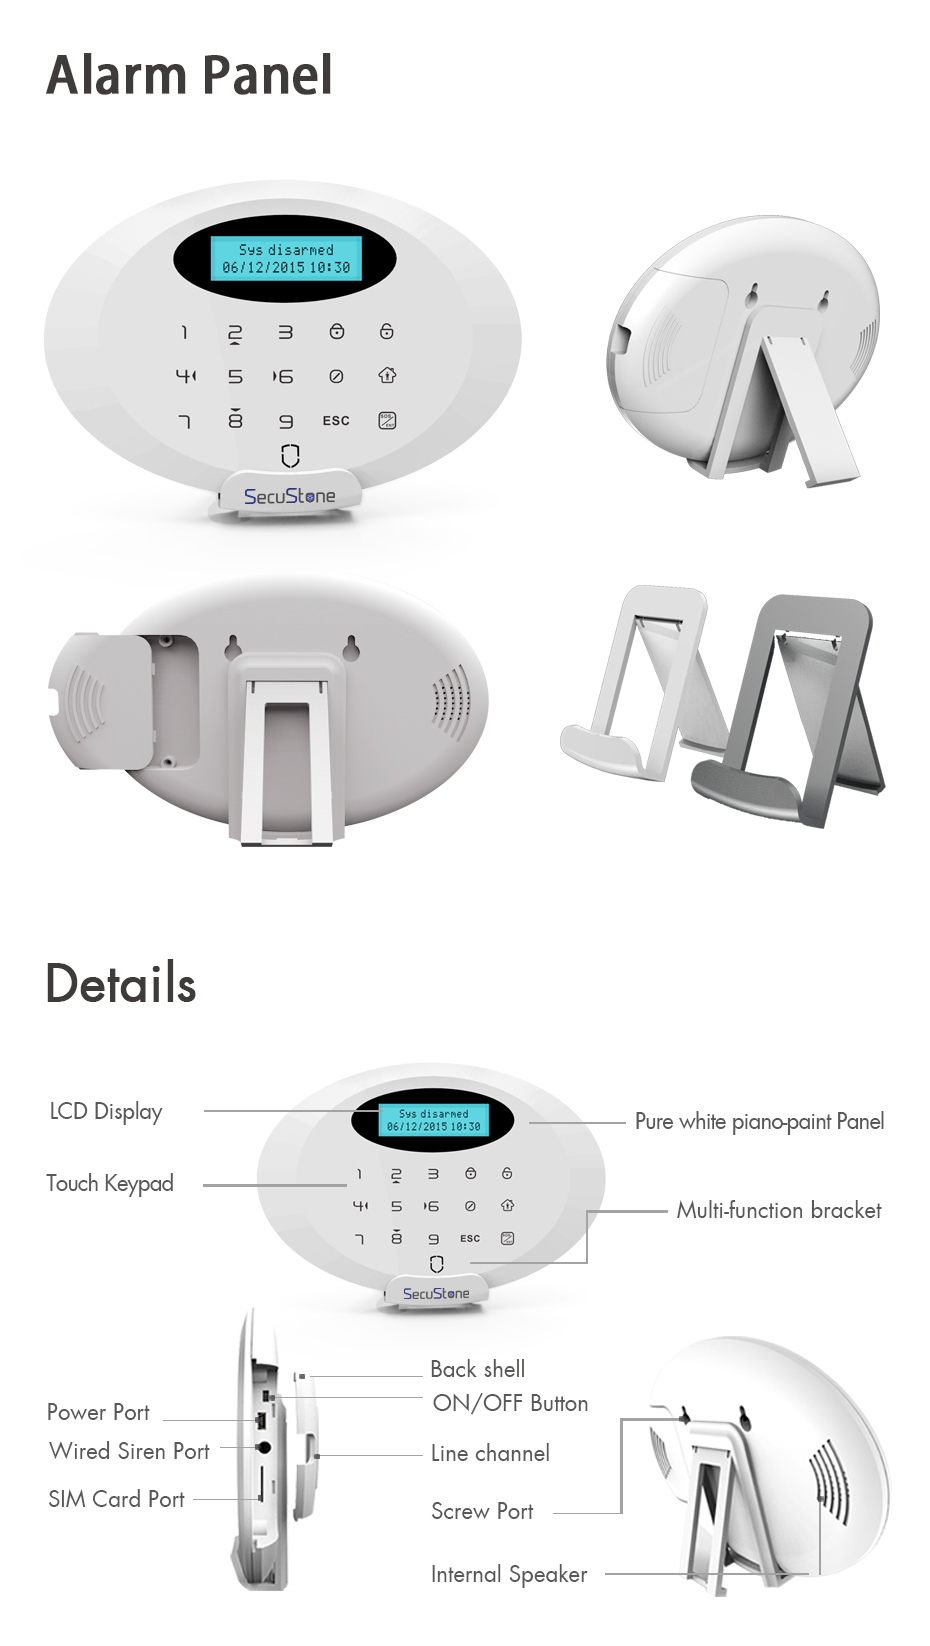 Secustone Home Burglar GSM (Global System for Mobile Communications) Alarm System with Alarm Detectors